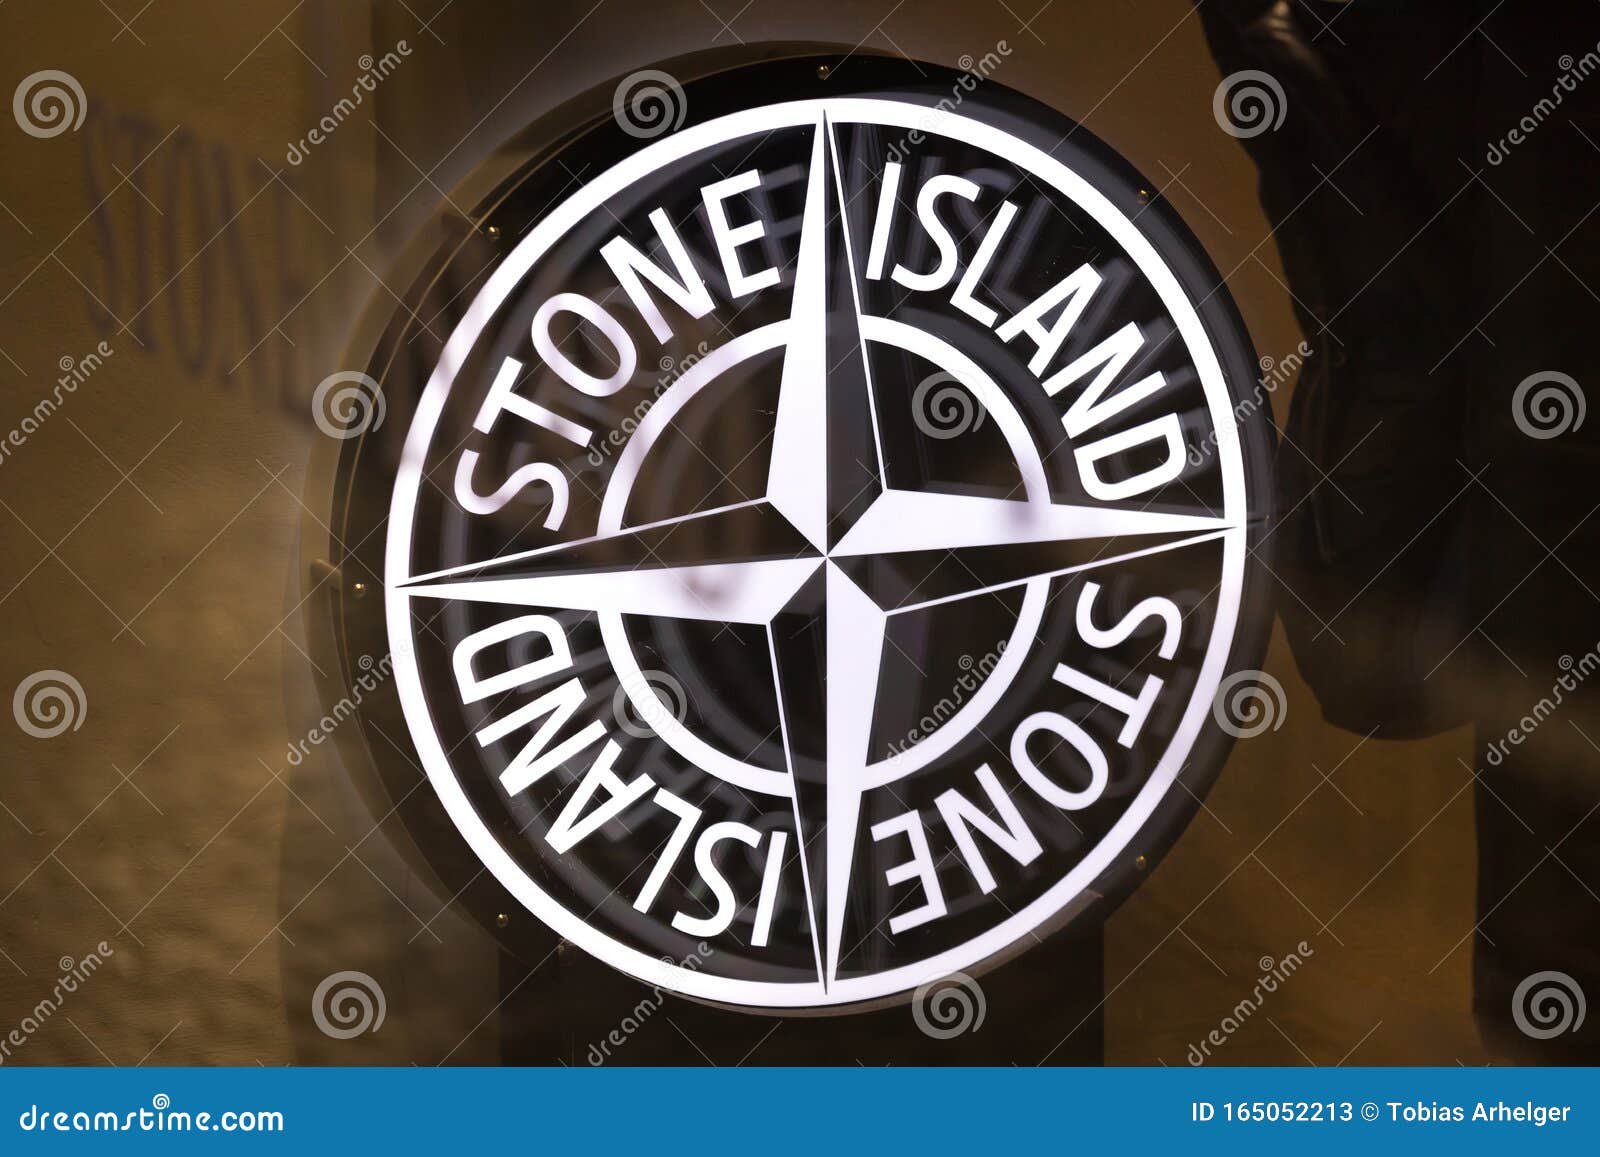 stone island logo